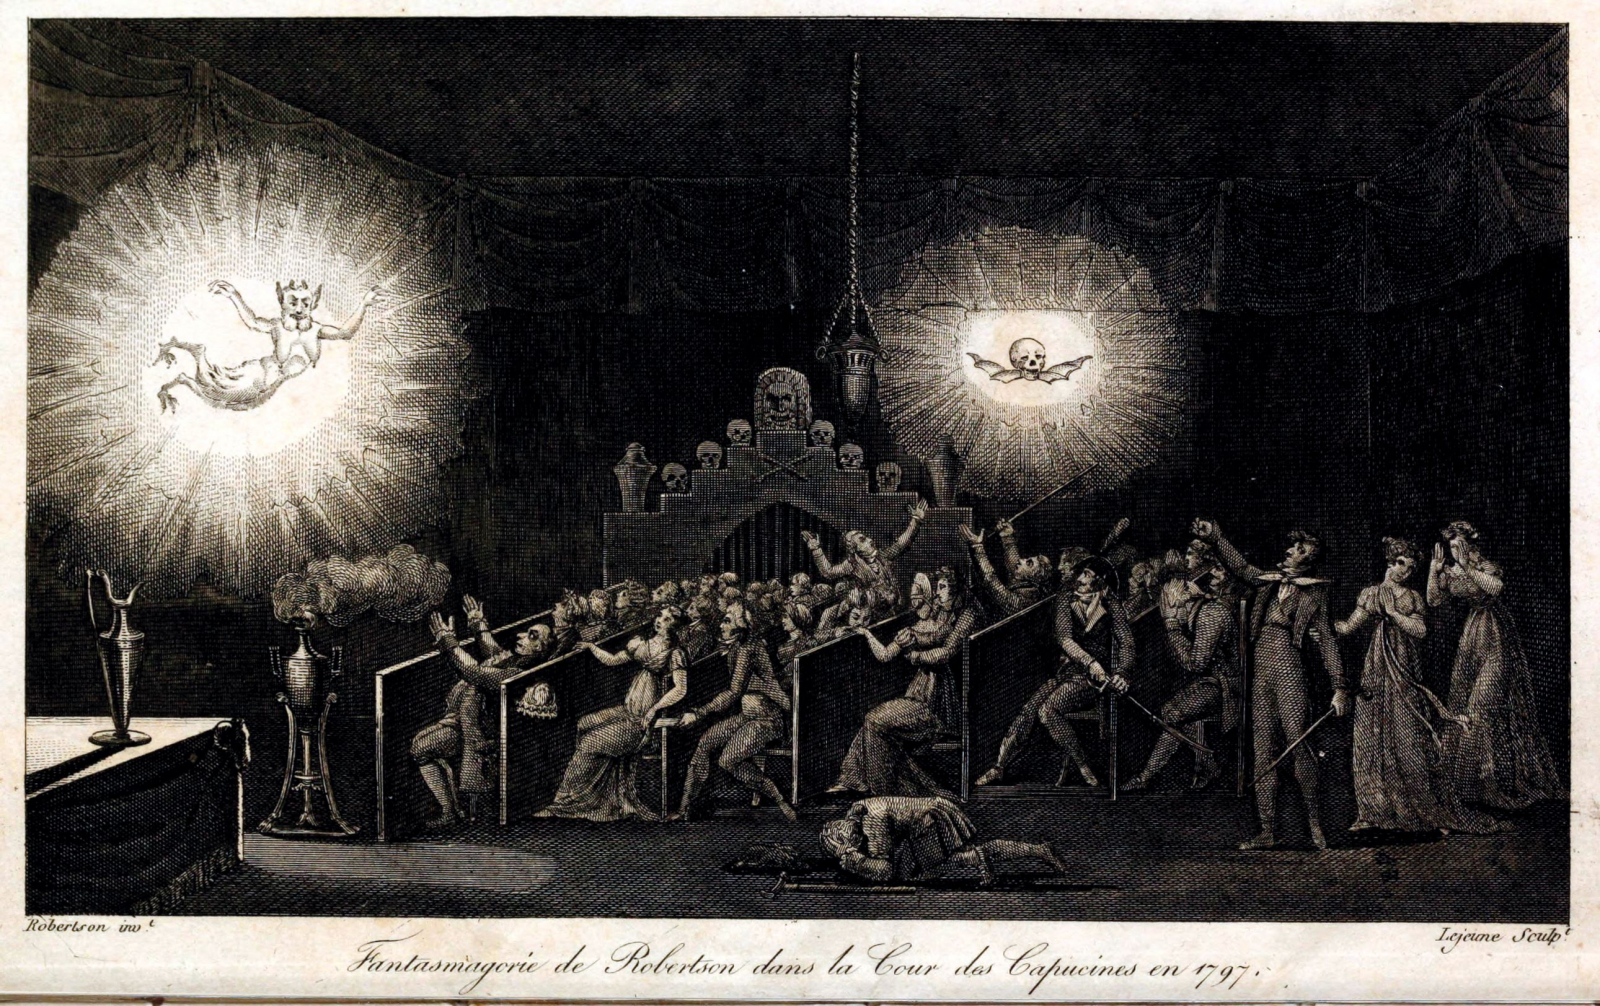 Графіка з книги «Mémoires récréatifs, scientifiques et anecdotiques du physicien-aéronaute» E.Г. Робертсон, Париж 1831. Показує виставу-фантасмагорію відомого ілюзіоніста Етьєна-Гаспара Робертсона.